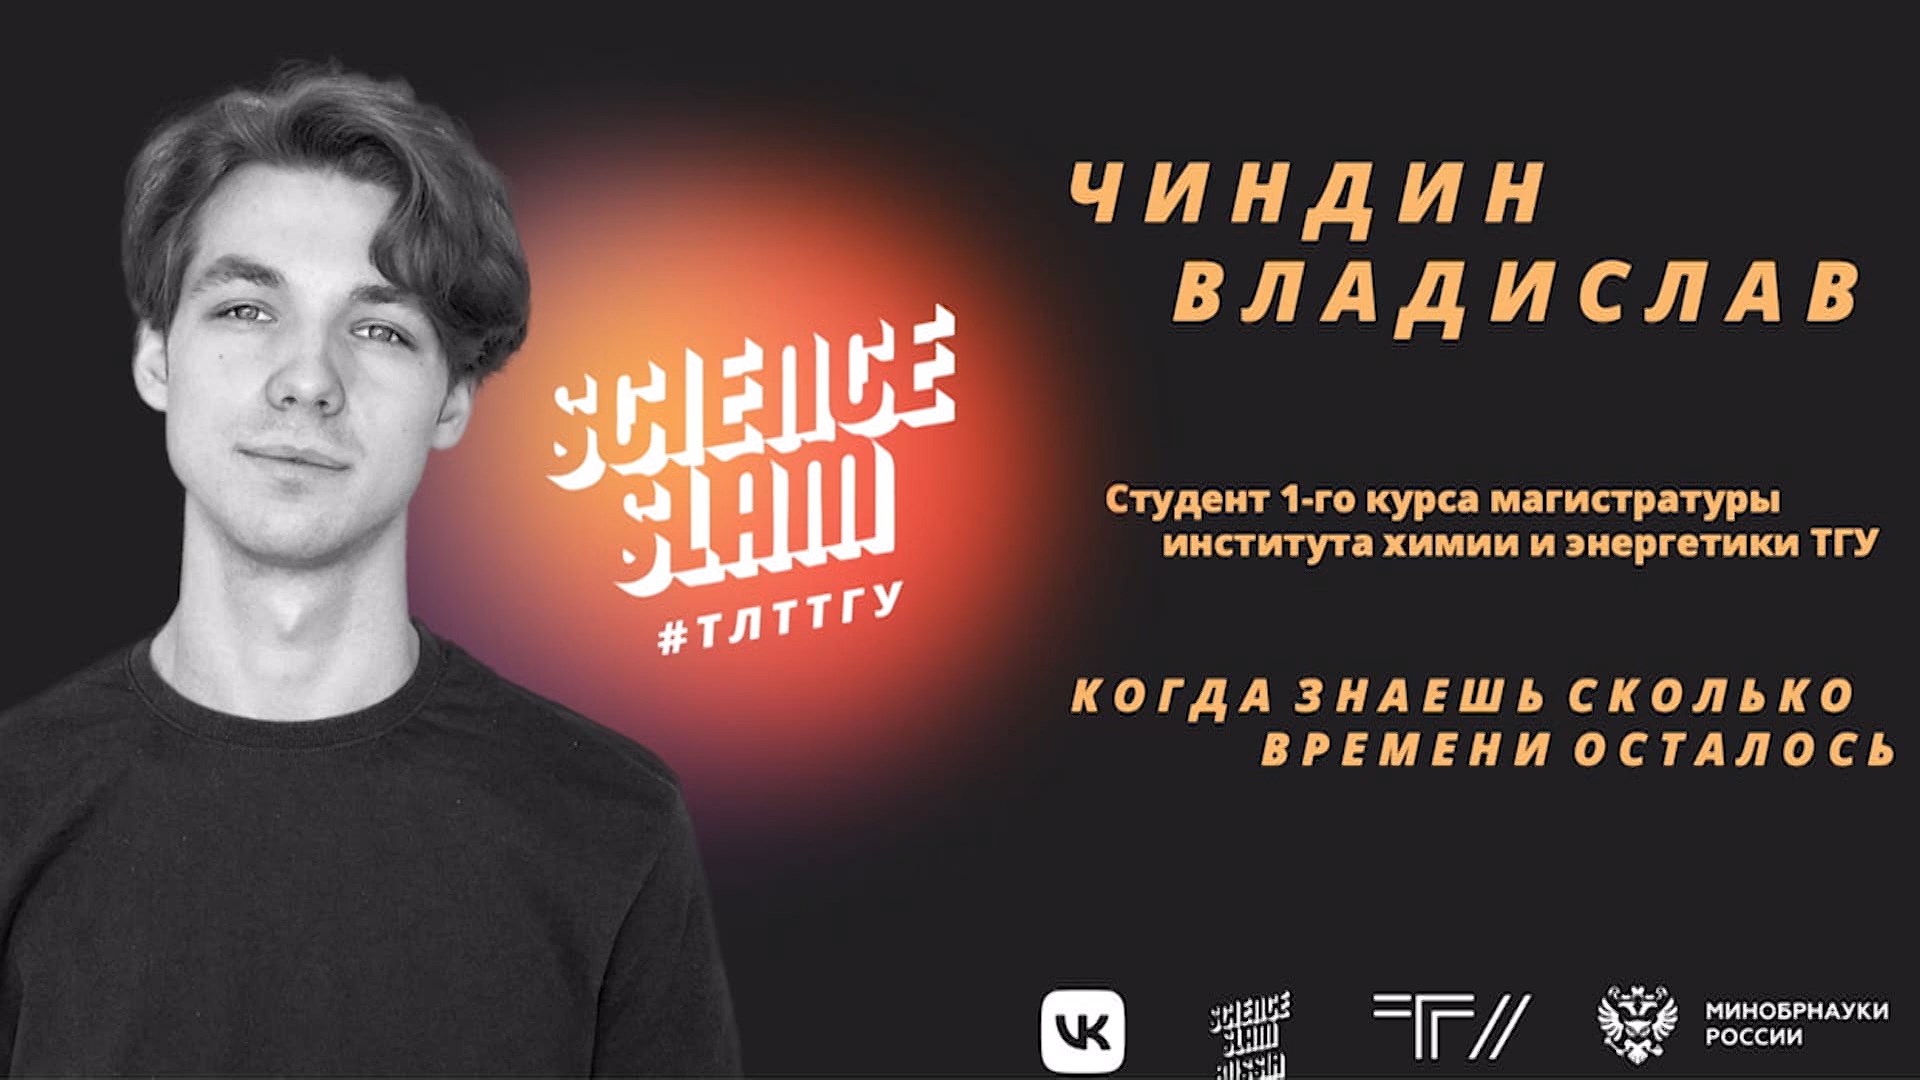 Science Slam #ТЛТТГУ: Владислав Чиндин